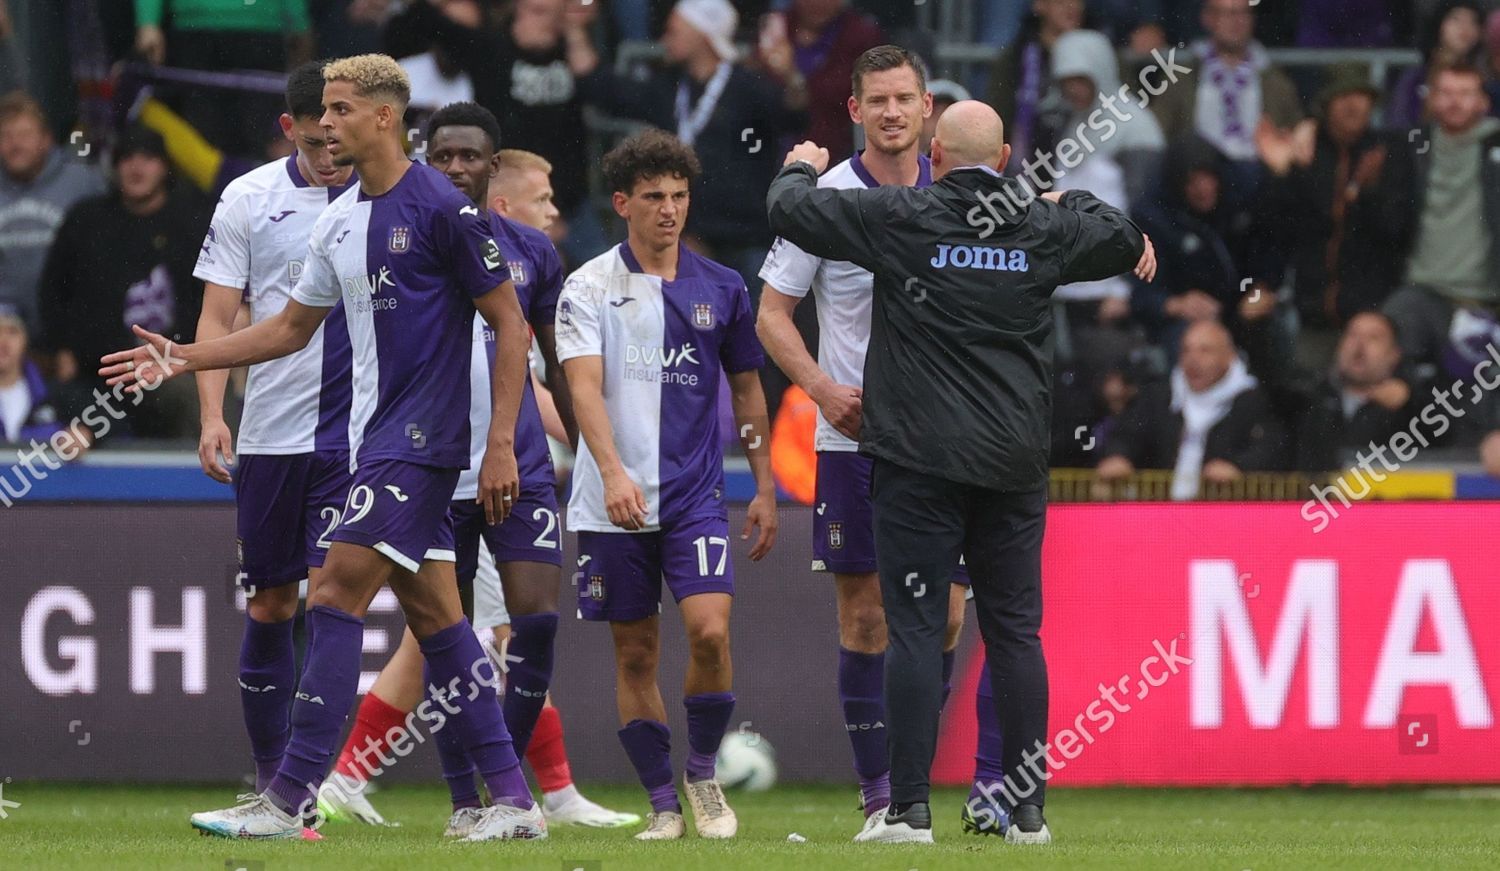 Anderlecht's head coach Brian Riemer celebrates during a soccer